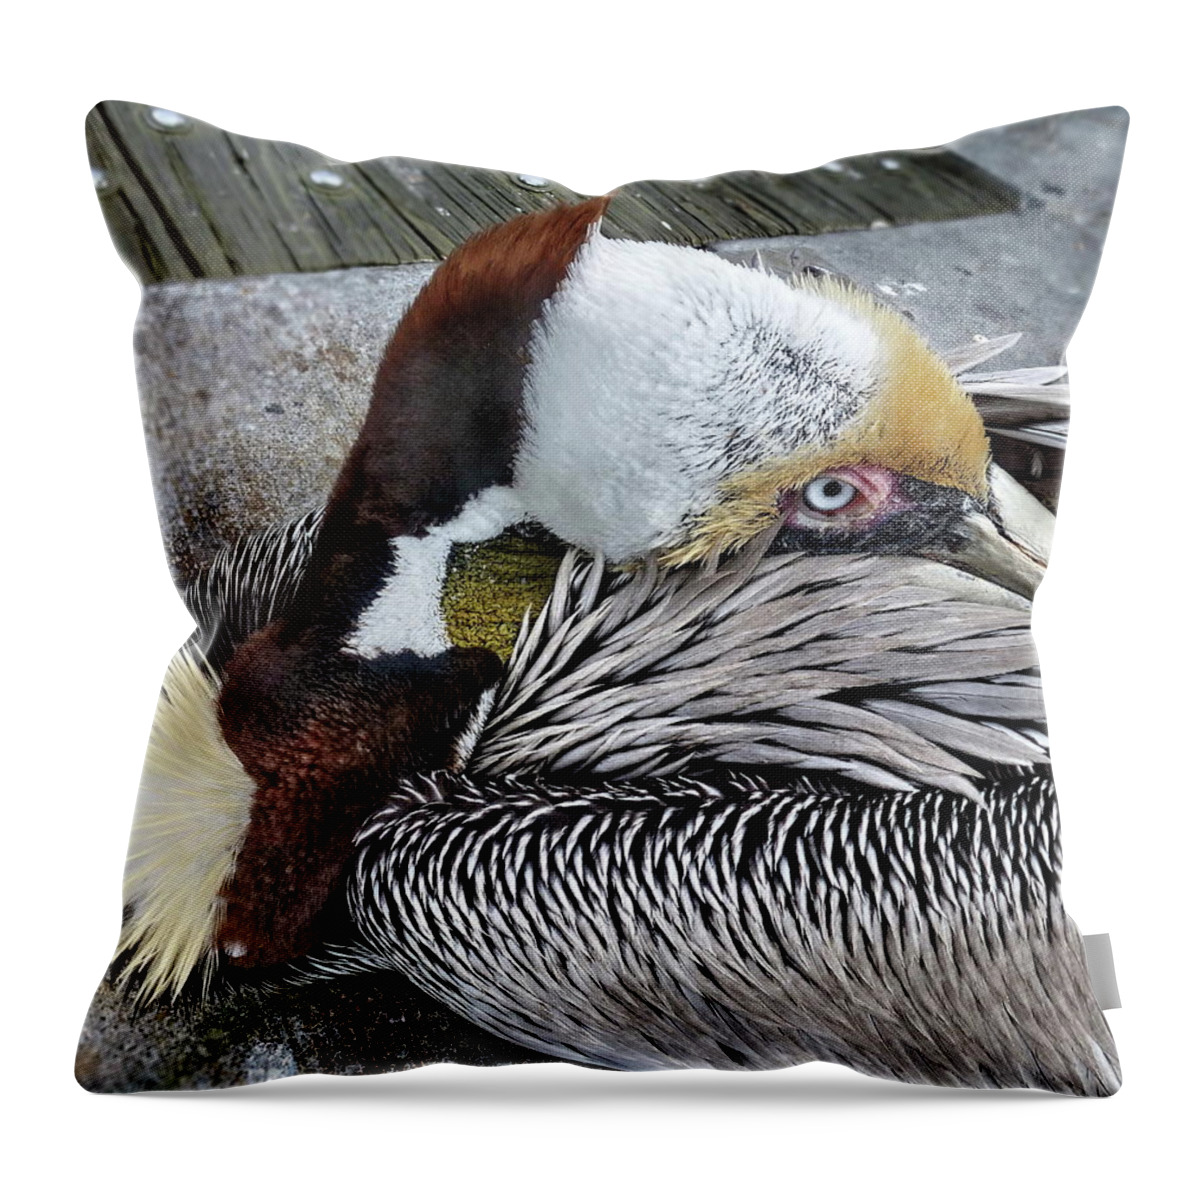 Brown Pelican Throw Pillow featuring the photograph I am not Sleeping by Lyuba Filatova